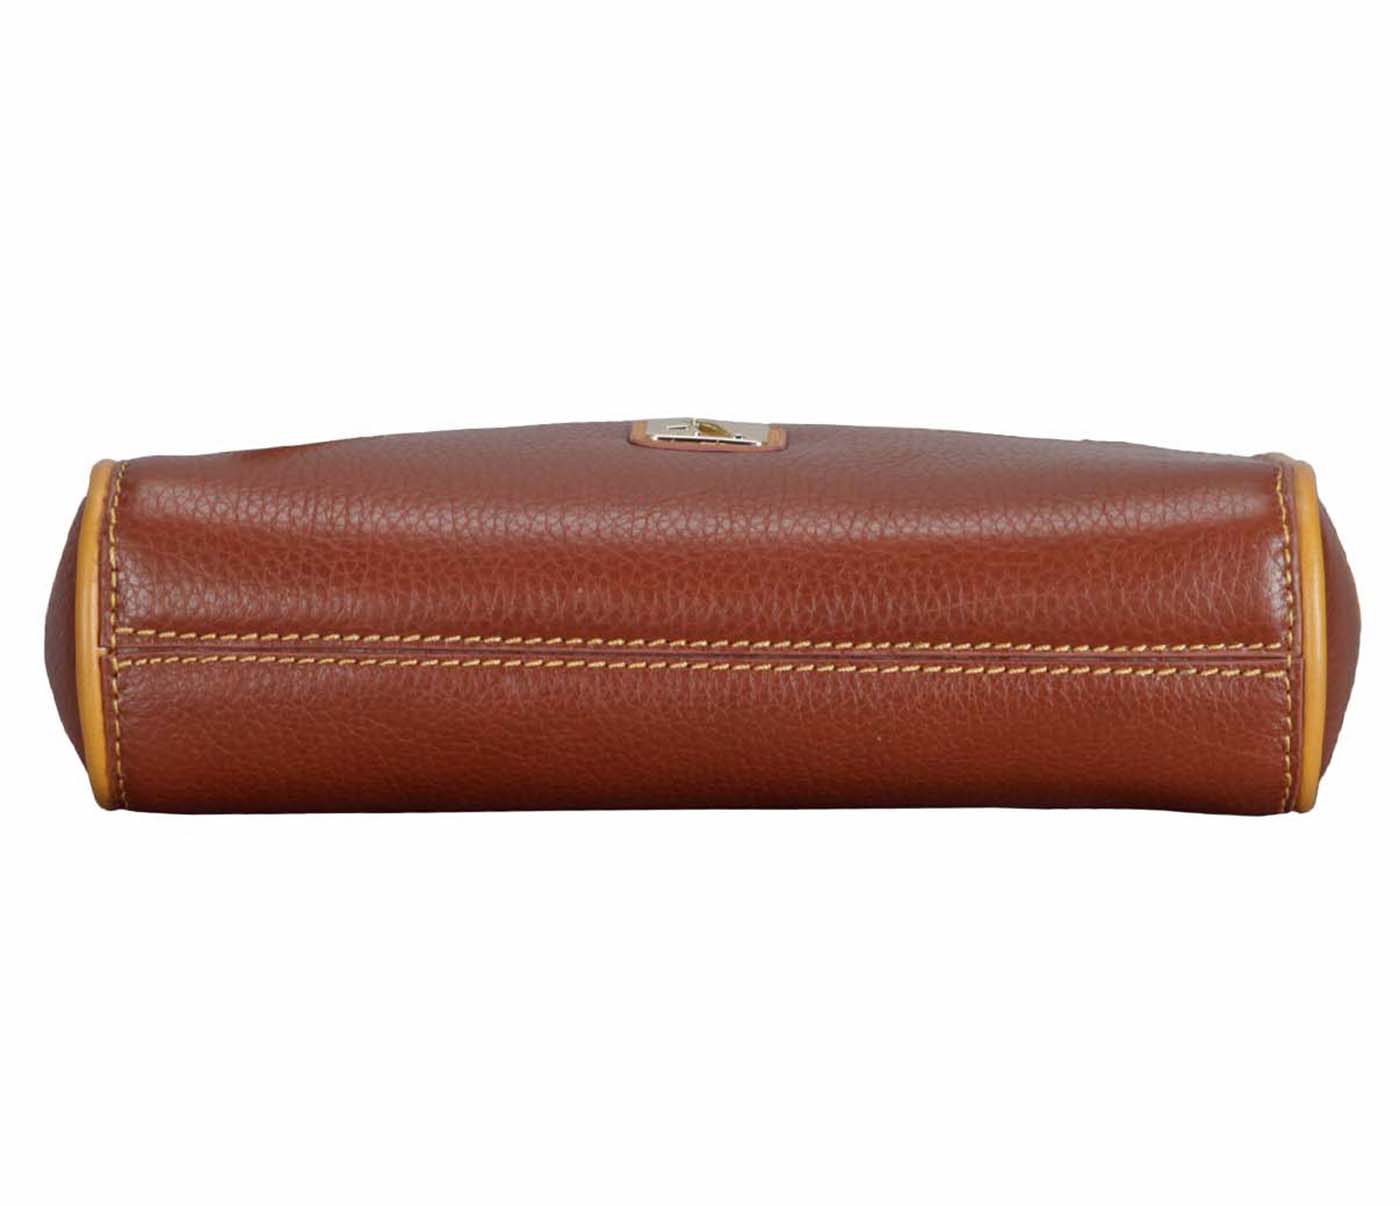 B825-Alissa-Sling cross body bag in Genuine Leather - Tan